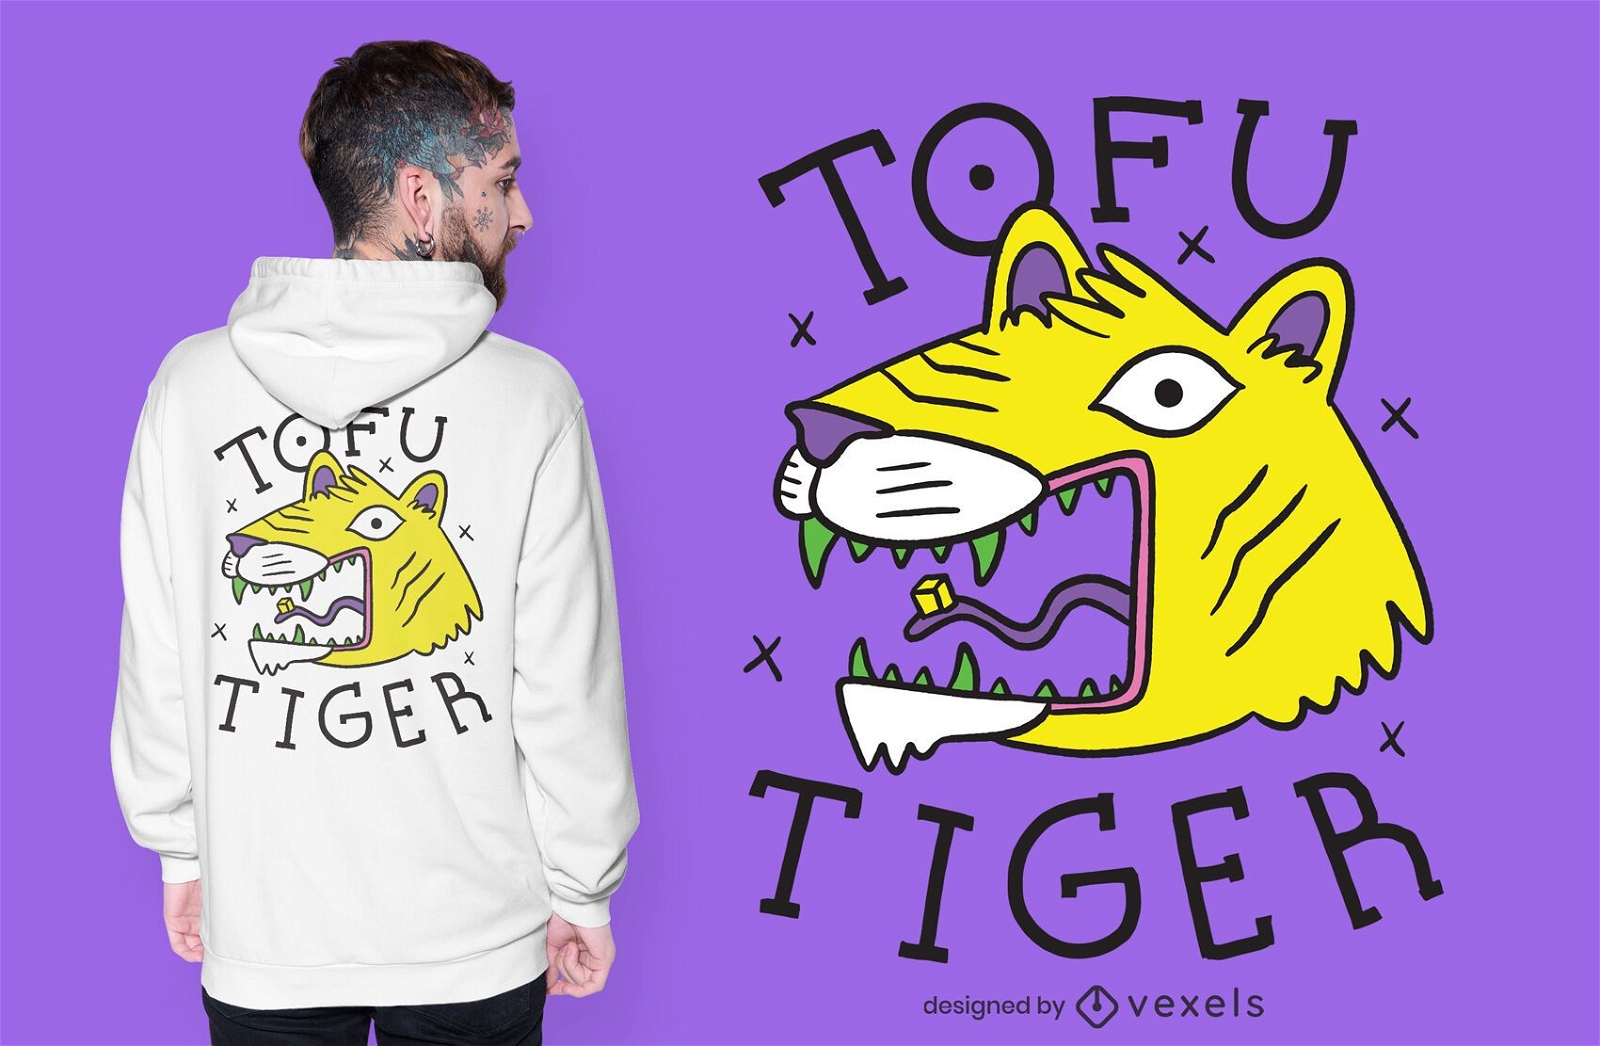 Tofu tiger t-shirt design